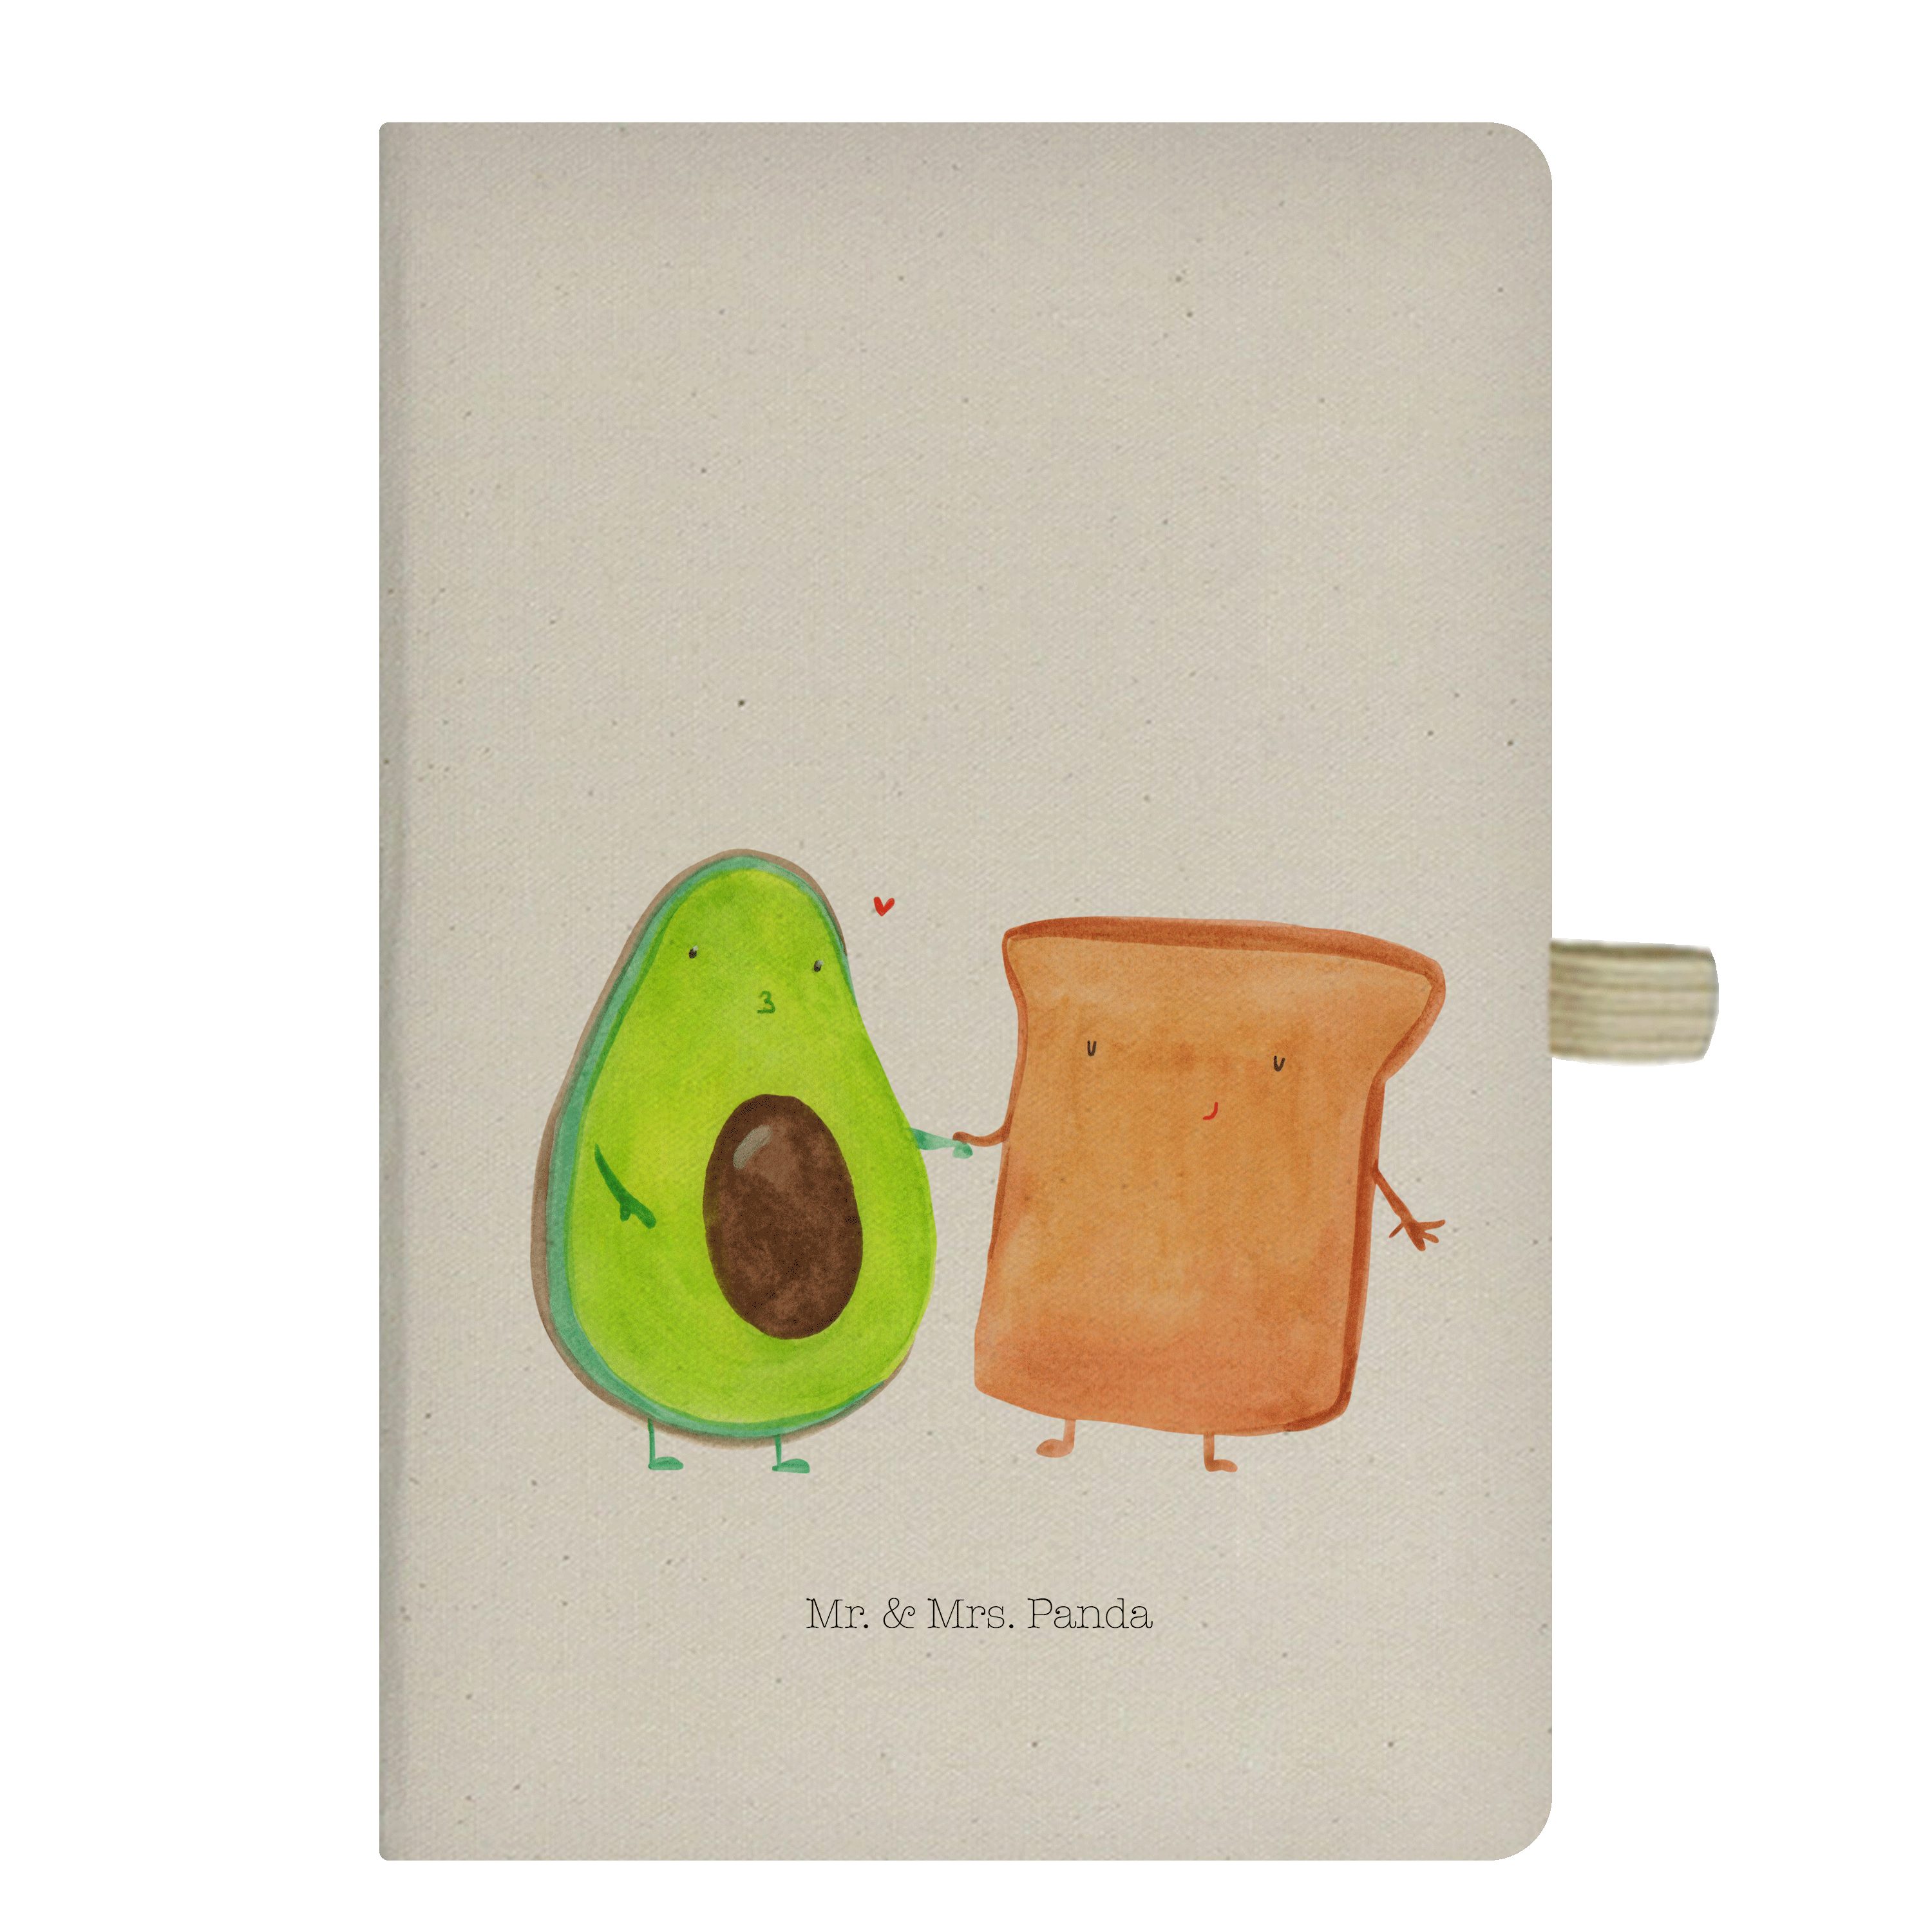 Mr. & Mrs. Panda Notizbuch Avocado + Toast - Transparent - Geschenk, Notizheft, Eintragebuch, Ta Mr. & Mrs. Panda